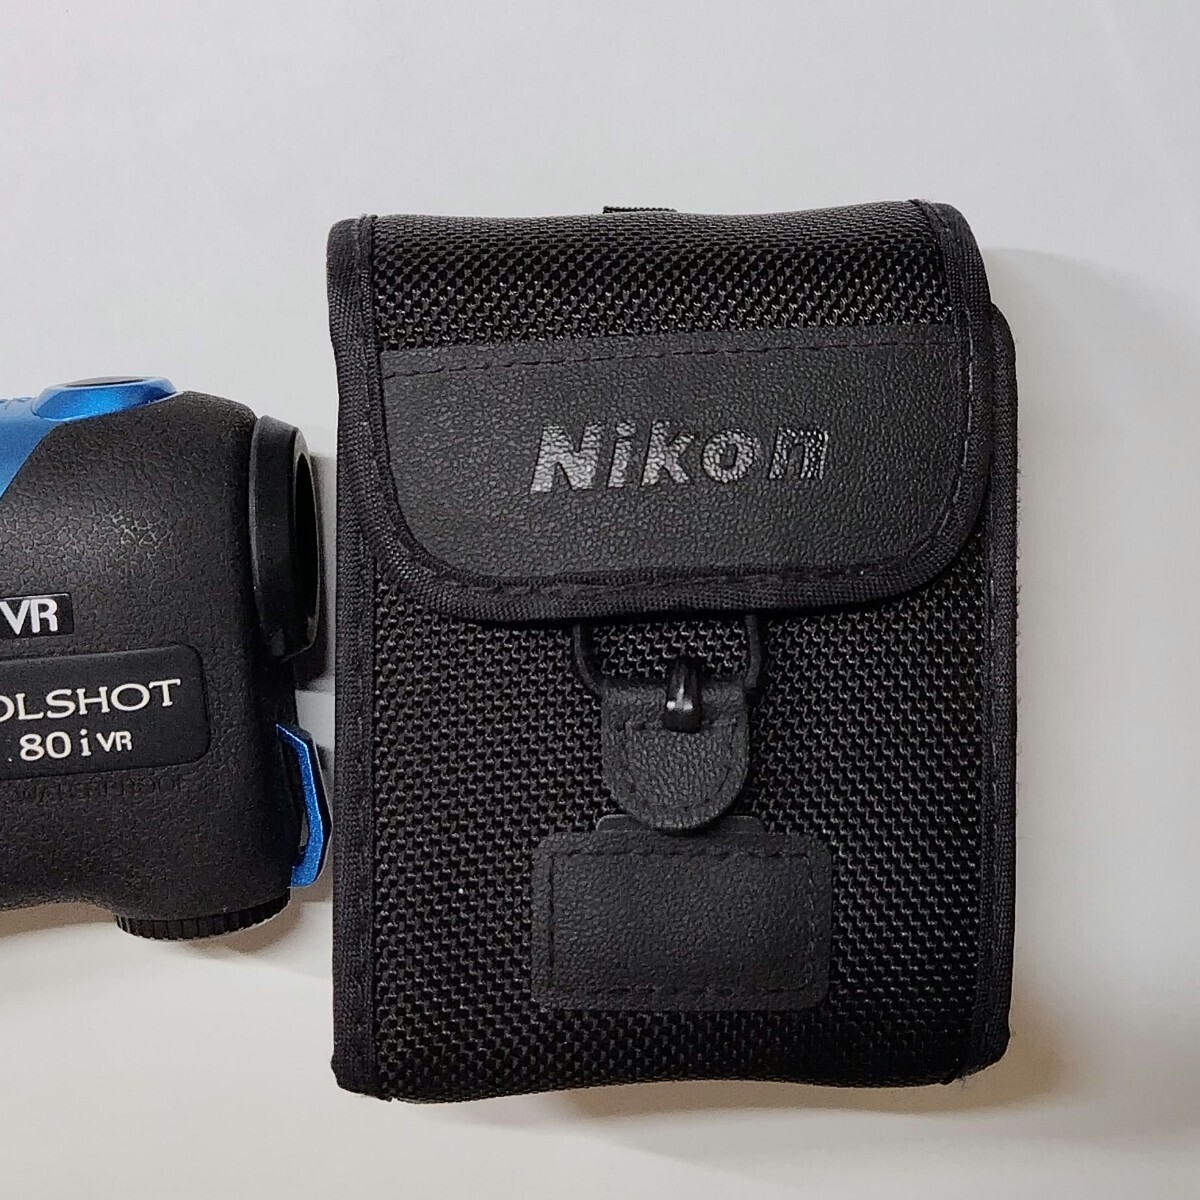  last exhibition [ beautiful goods scope ] Nikon NIKON COOLSHOT 80i VR Golf laser rangefinder on rice field Momoko measurement 0.5 second continuation measurement 